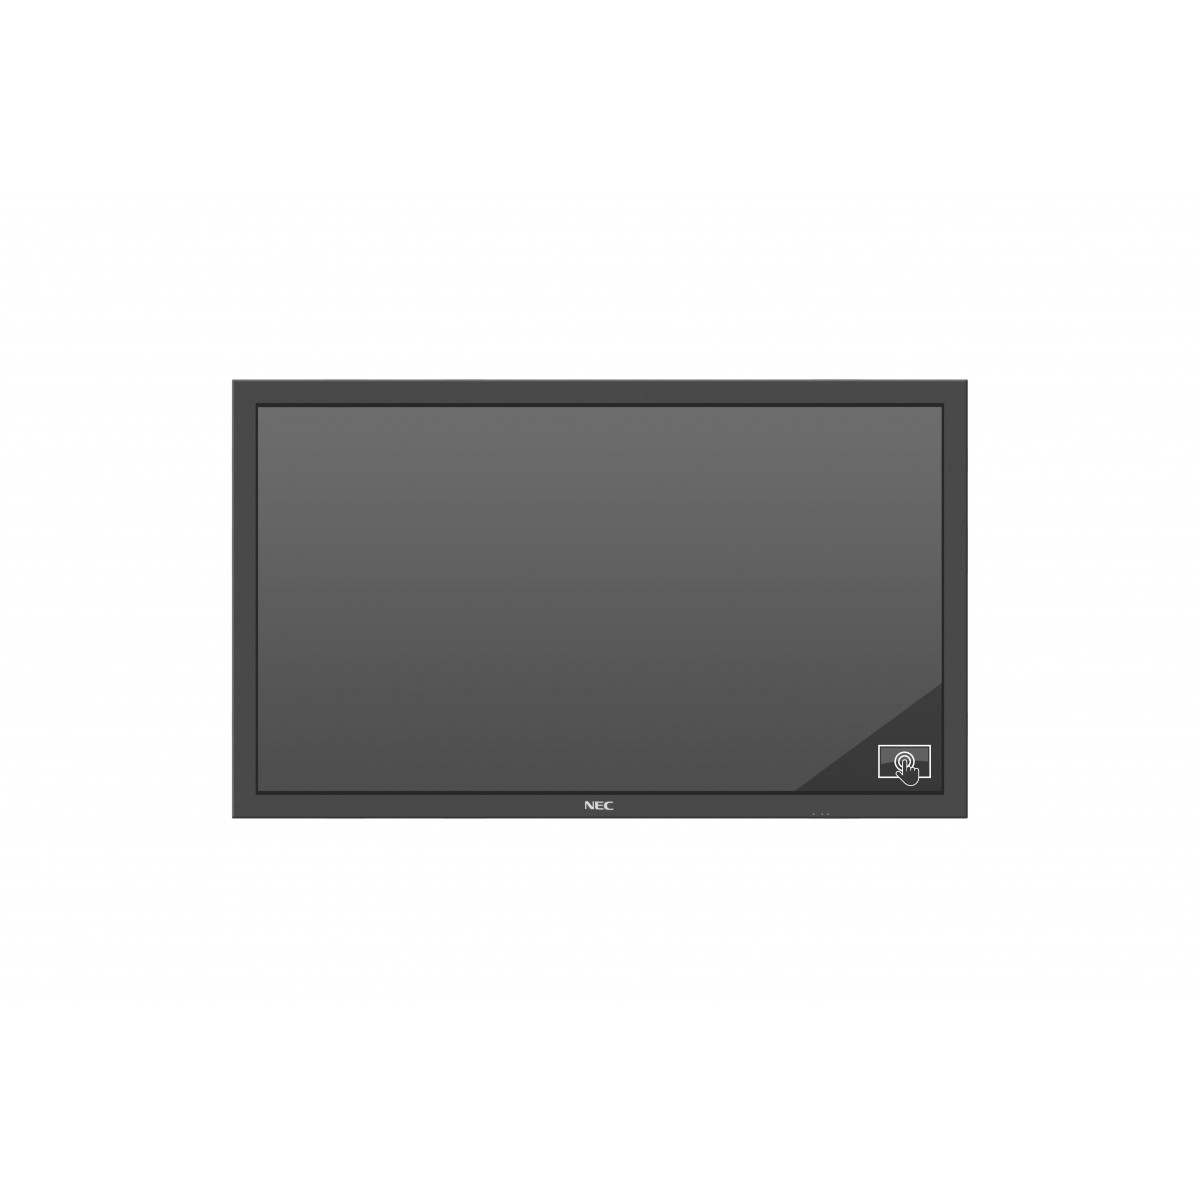 NEC Display MultiSync P404 SST - Digital signage flat panel - 101.6 cm (40) - LED - 1920 x 1080 pixels - 24-7